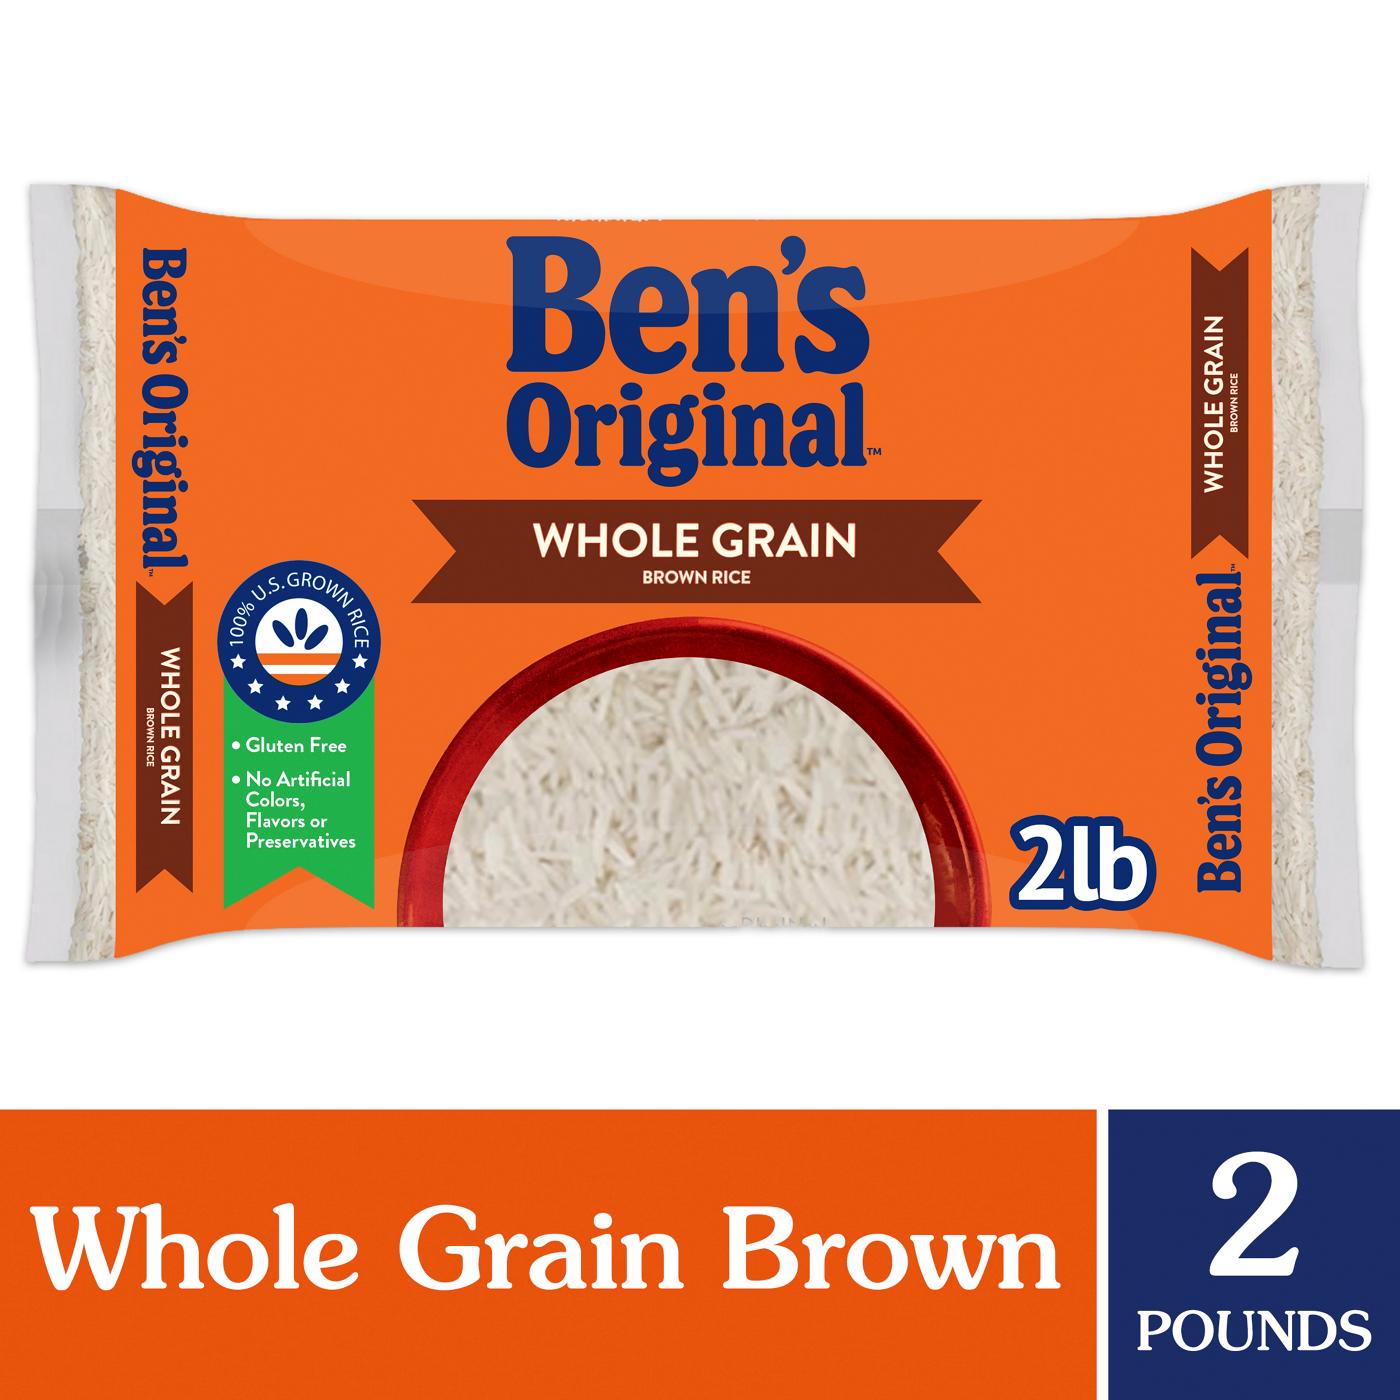 Ben's Original Whole Grain Brown Rice; image 5 of 7